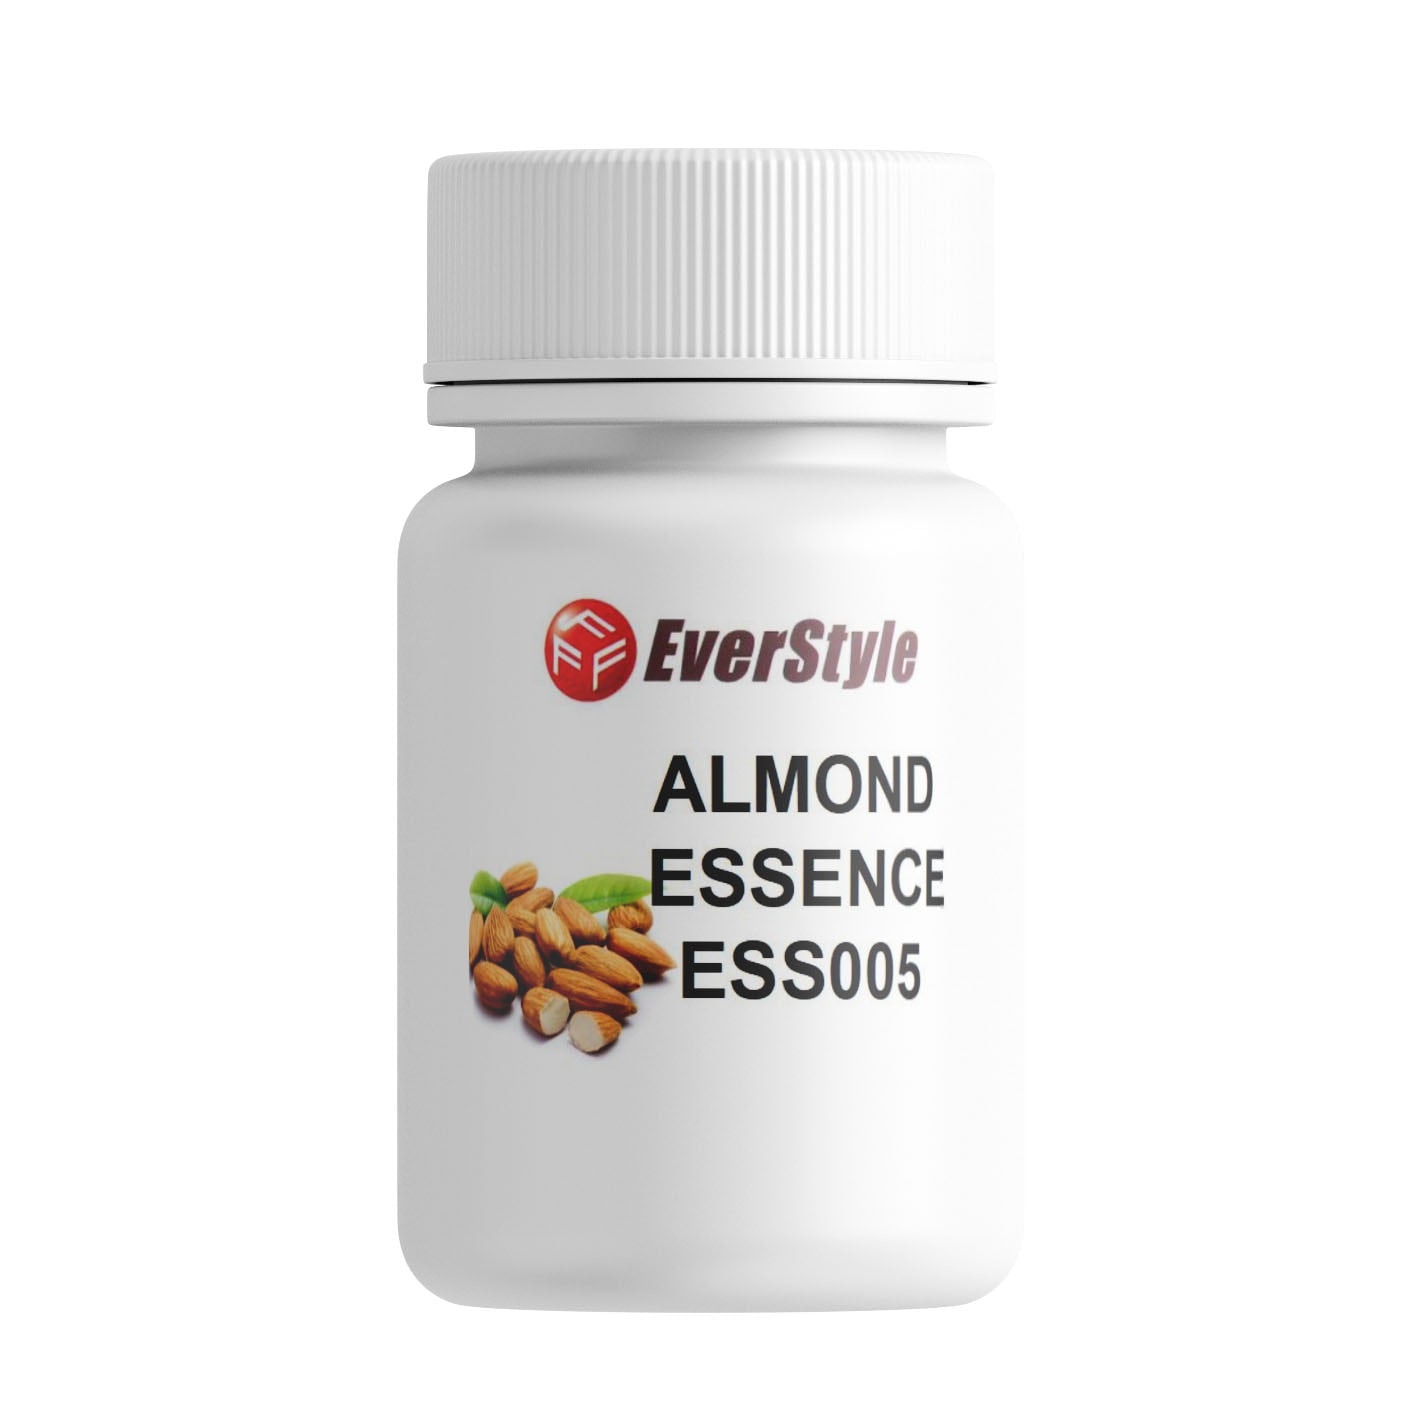 Everstyle Almond Essence 30g (ESS005)